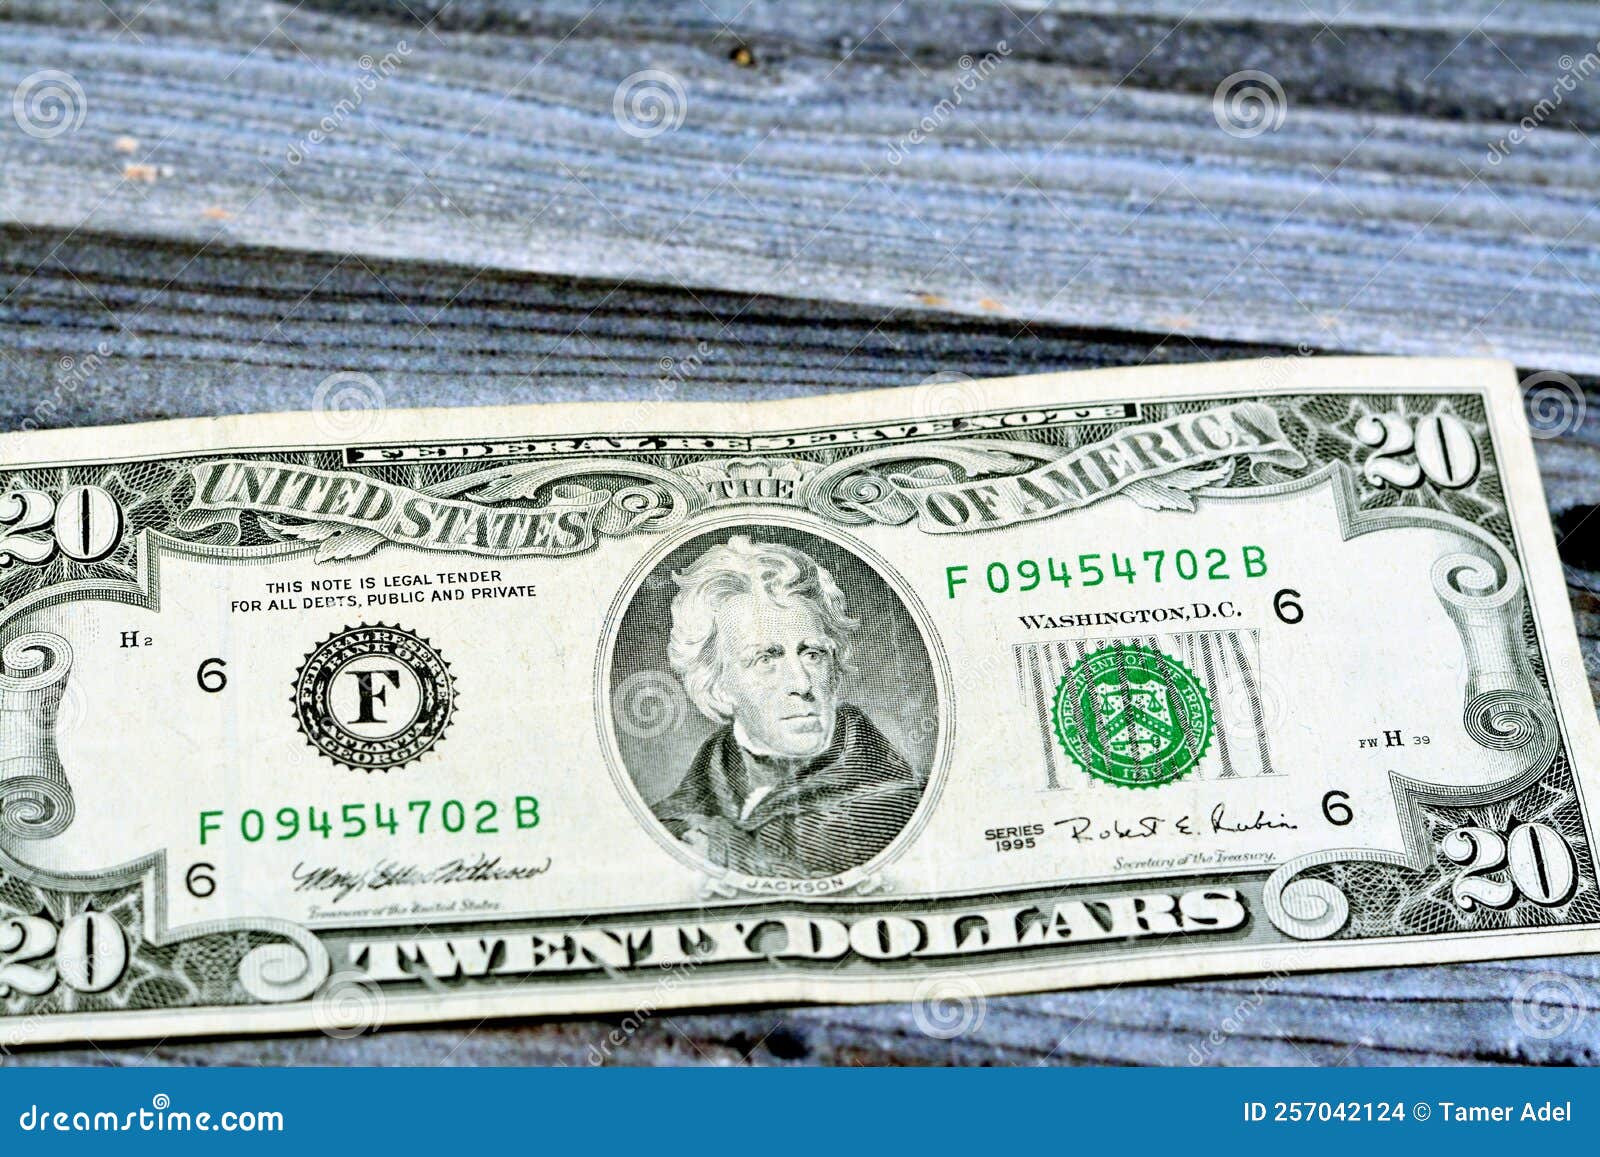 old twenty dollar bill actual size